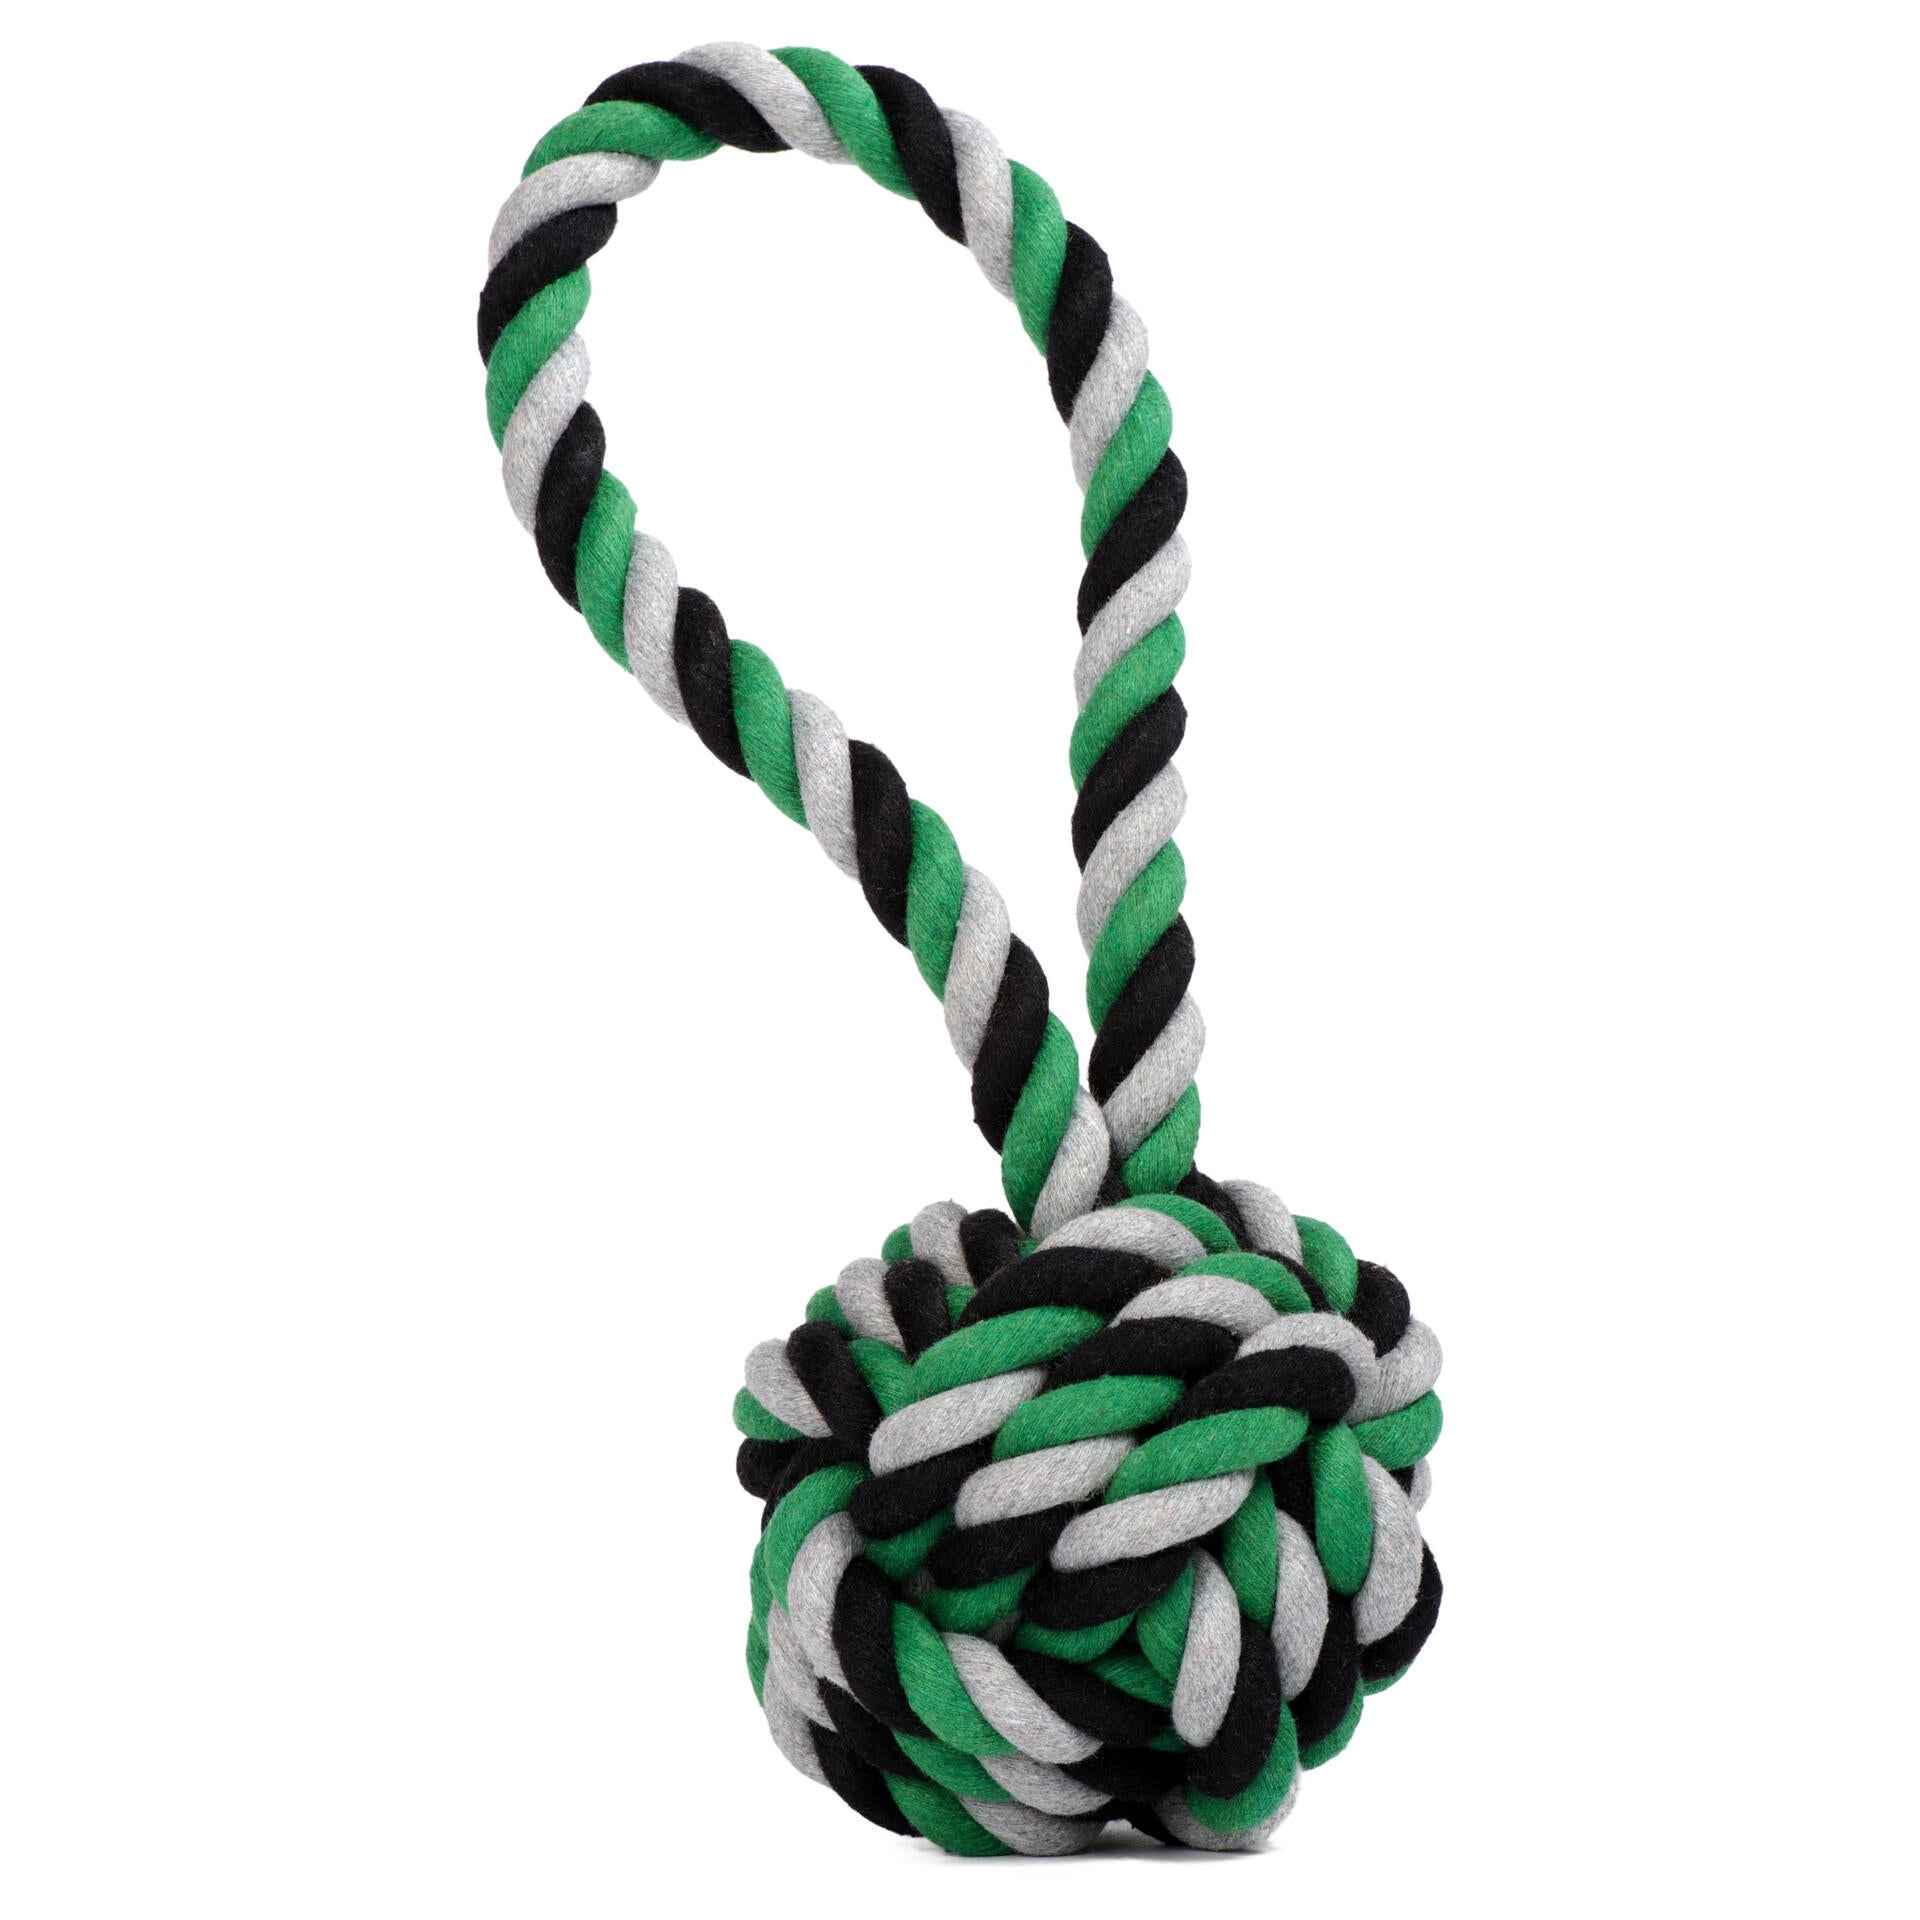 Laboni - Baumwollspielzeug "MEGA Ball mit Schlaufe" grün